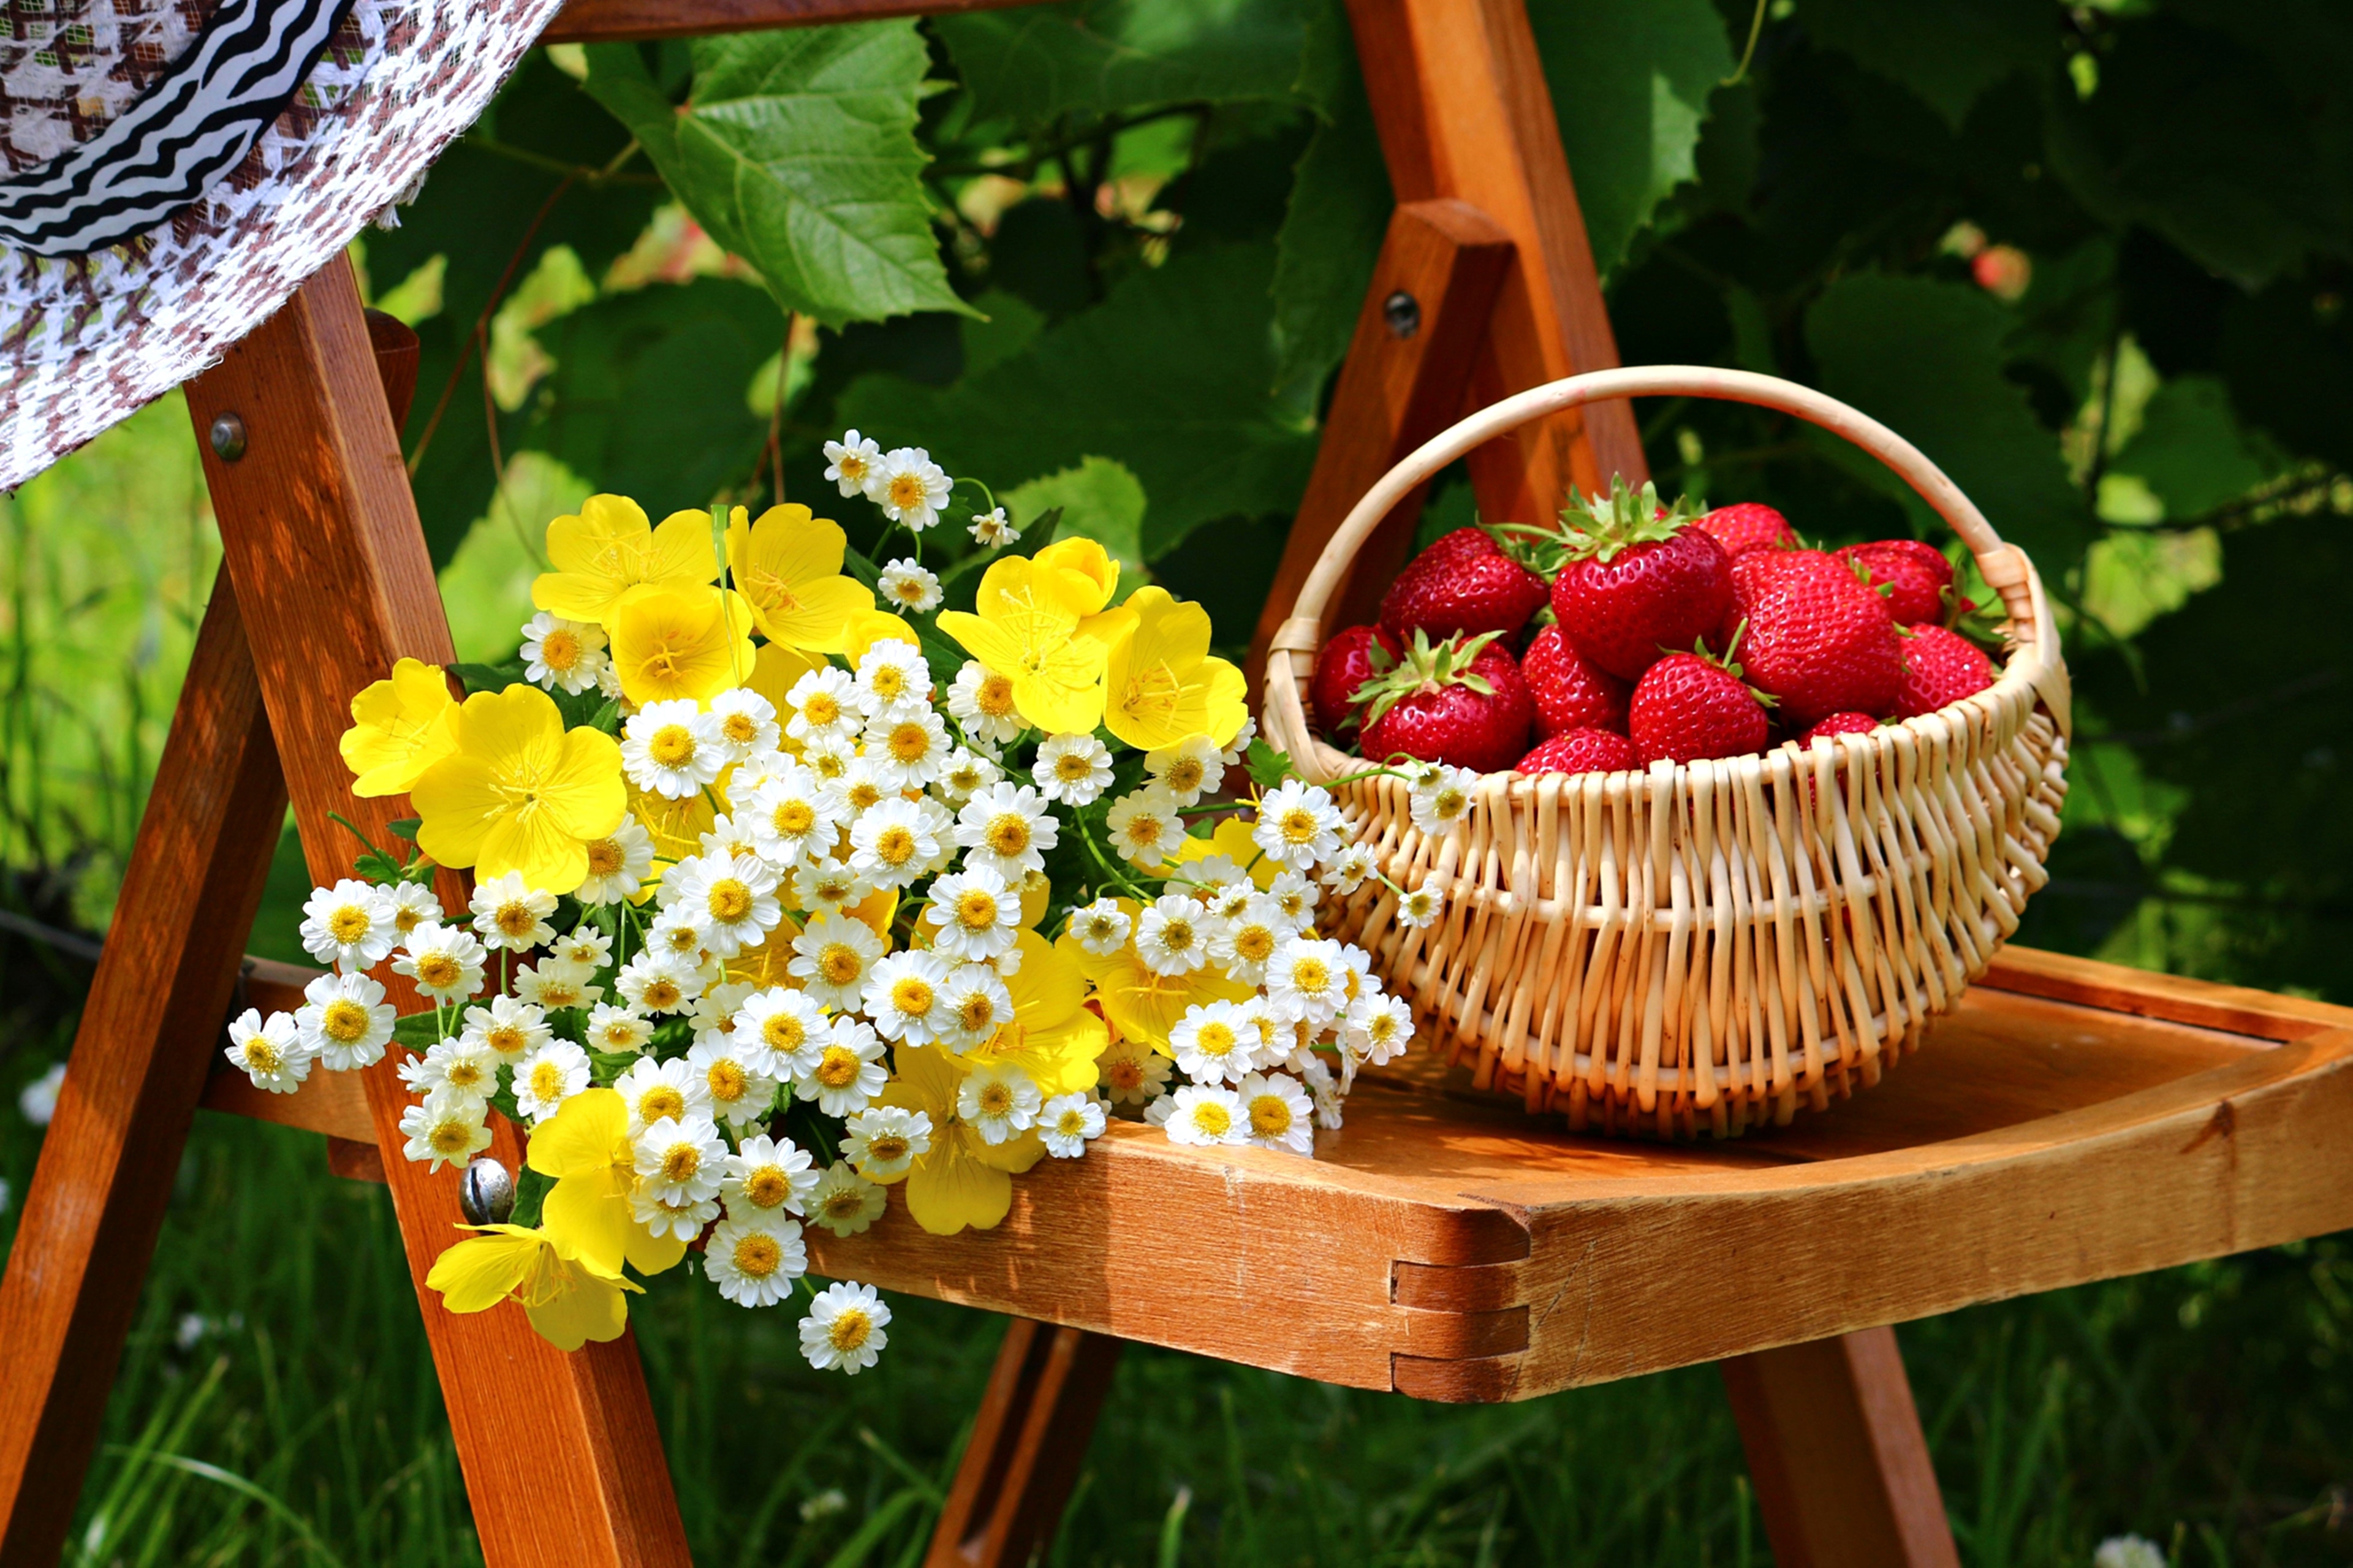 photography, still life, basket, flower, strawberry